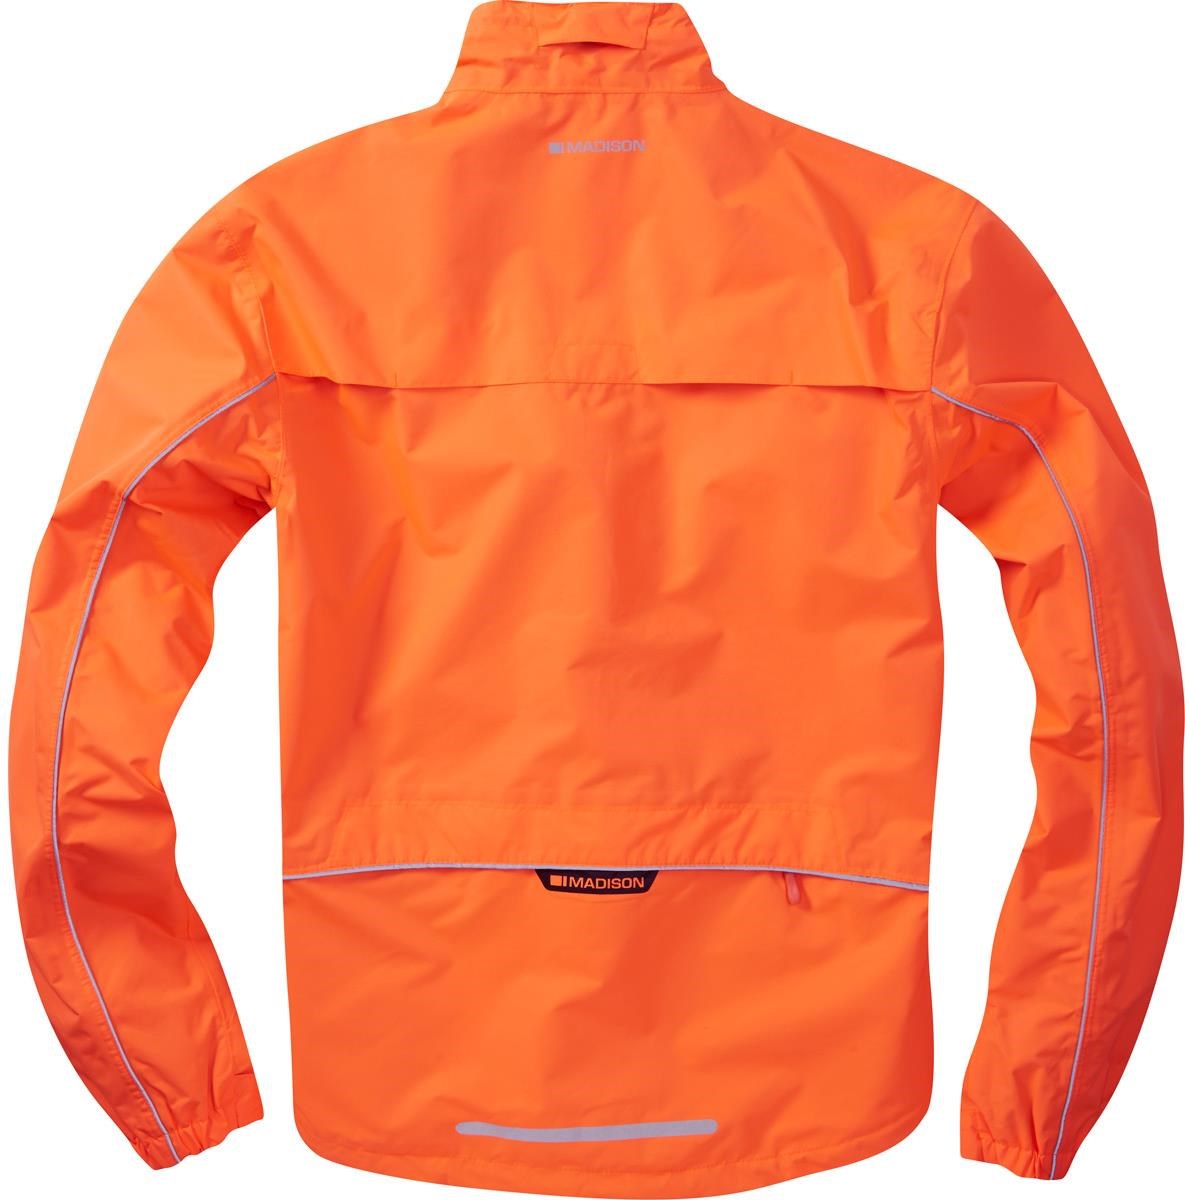 Madison Protec Waterproof Jacket